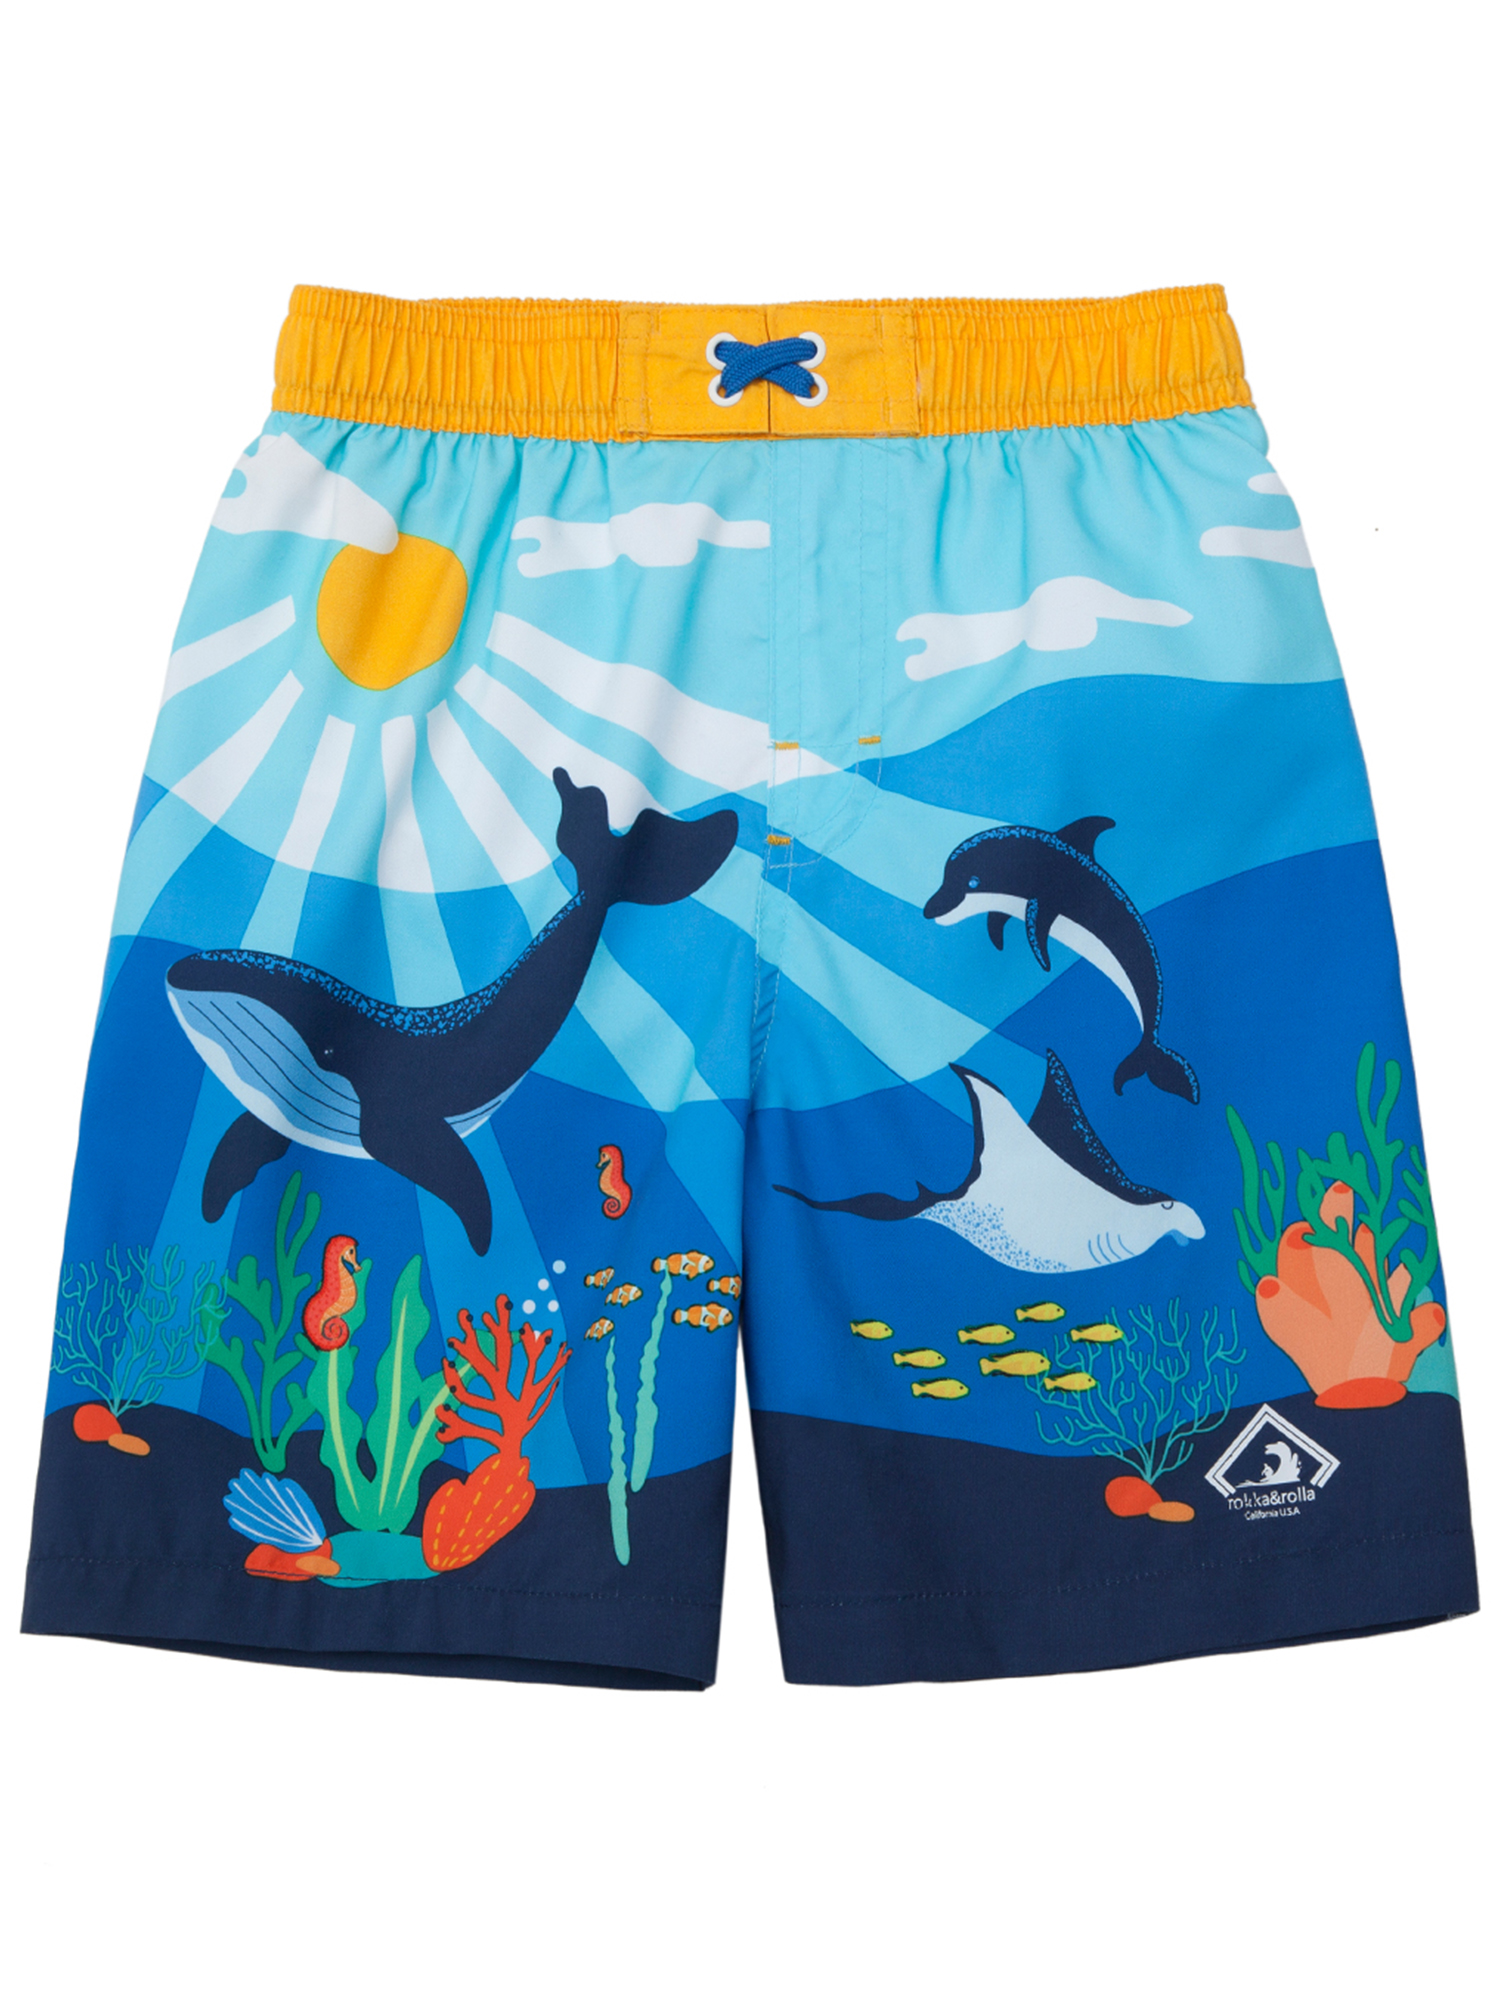 Rokka&Rolla Toddler Boys' Swim Trunks with Mesh Liner Baby Swimwear, UPF 50+ Sizes 2T-5T - image 1 of 6